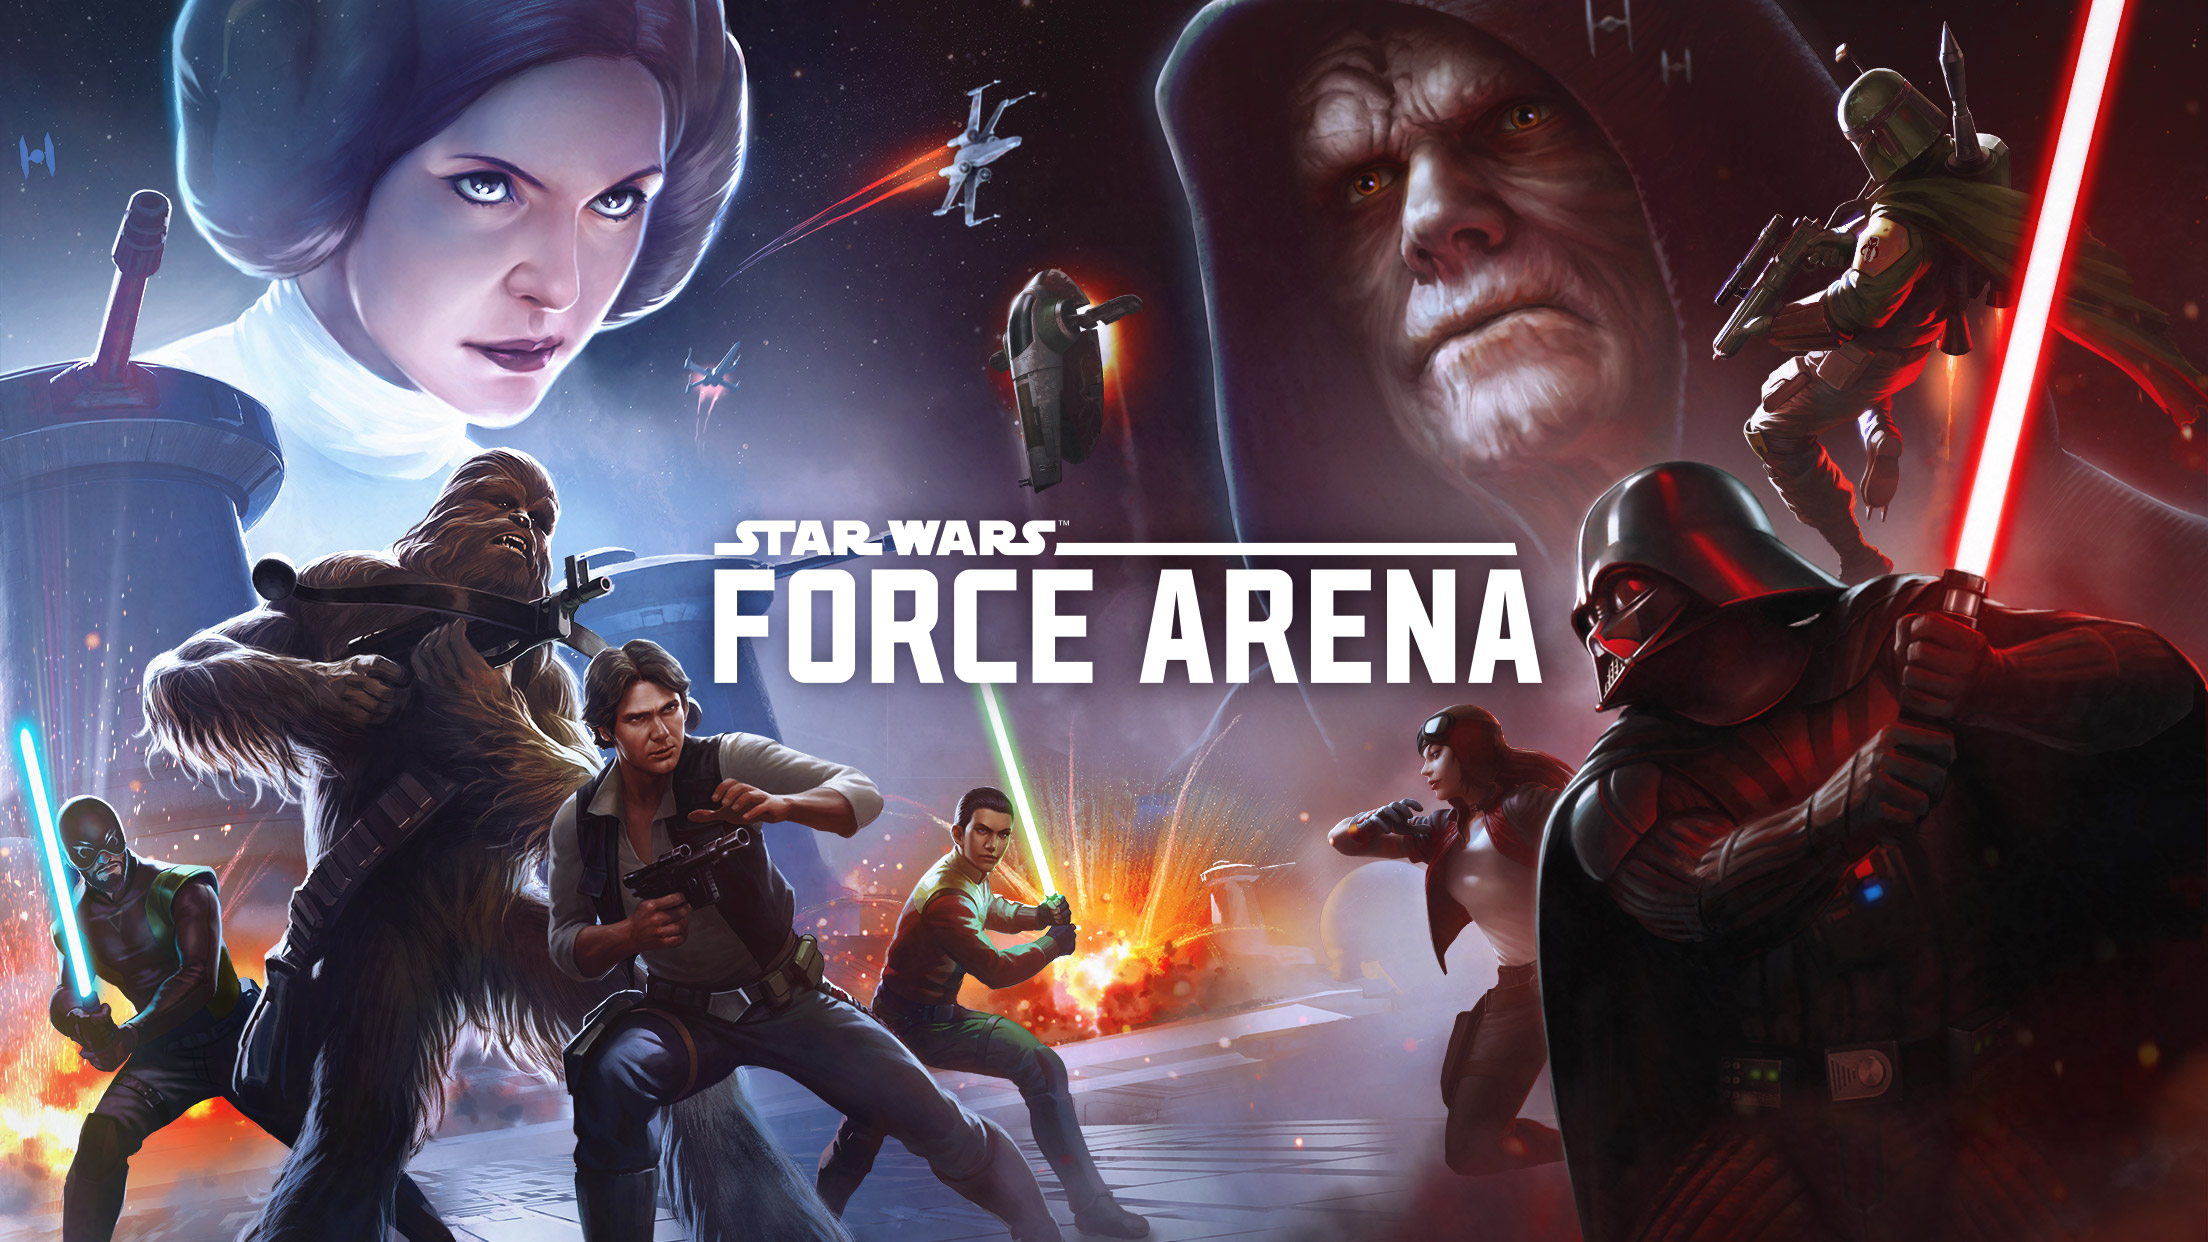 Boba Fett Chewbacca Darth Vader Han Solo Star Wars Force Arena 2208x1242